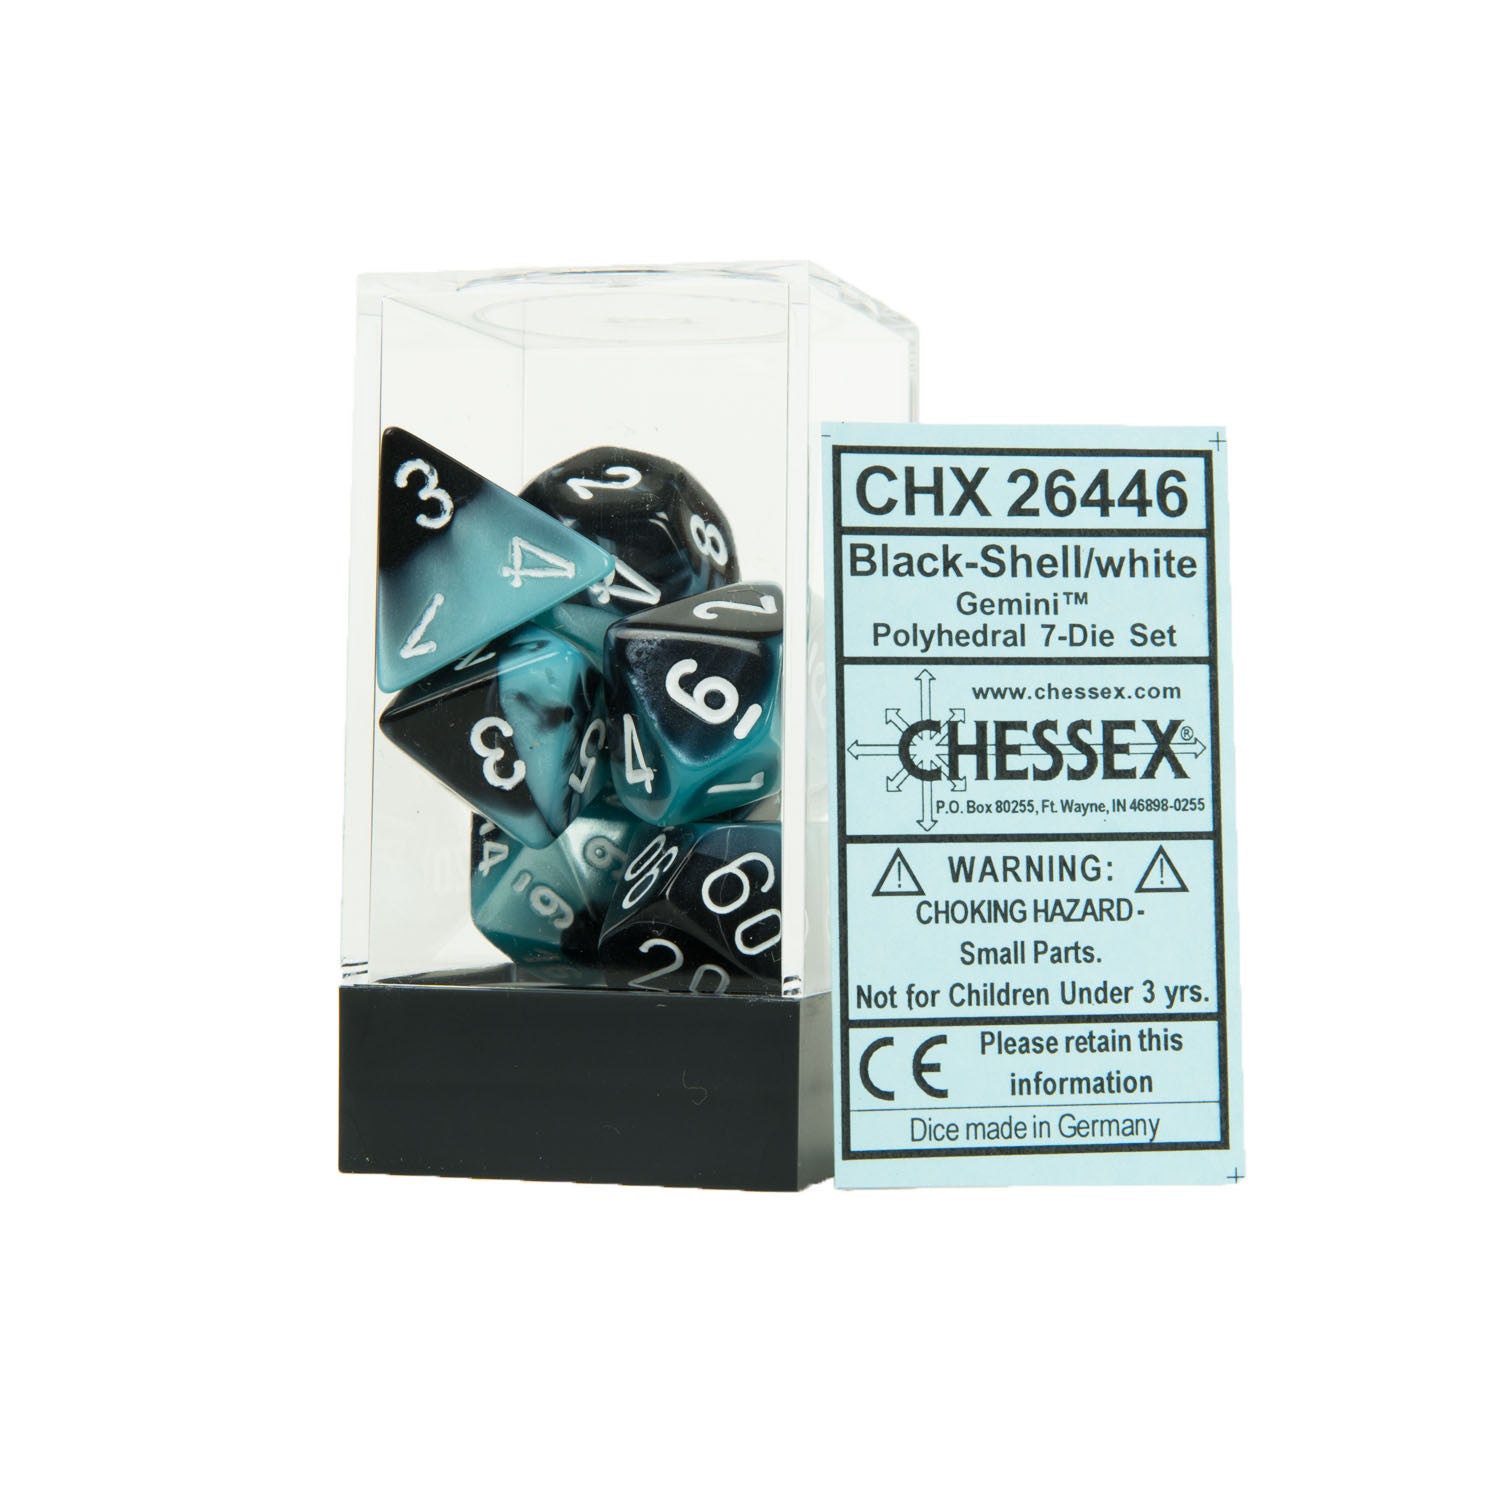 Chessex CHX26446 Black-Shell w/white Gemini™ Polyhedral Dice Set